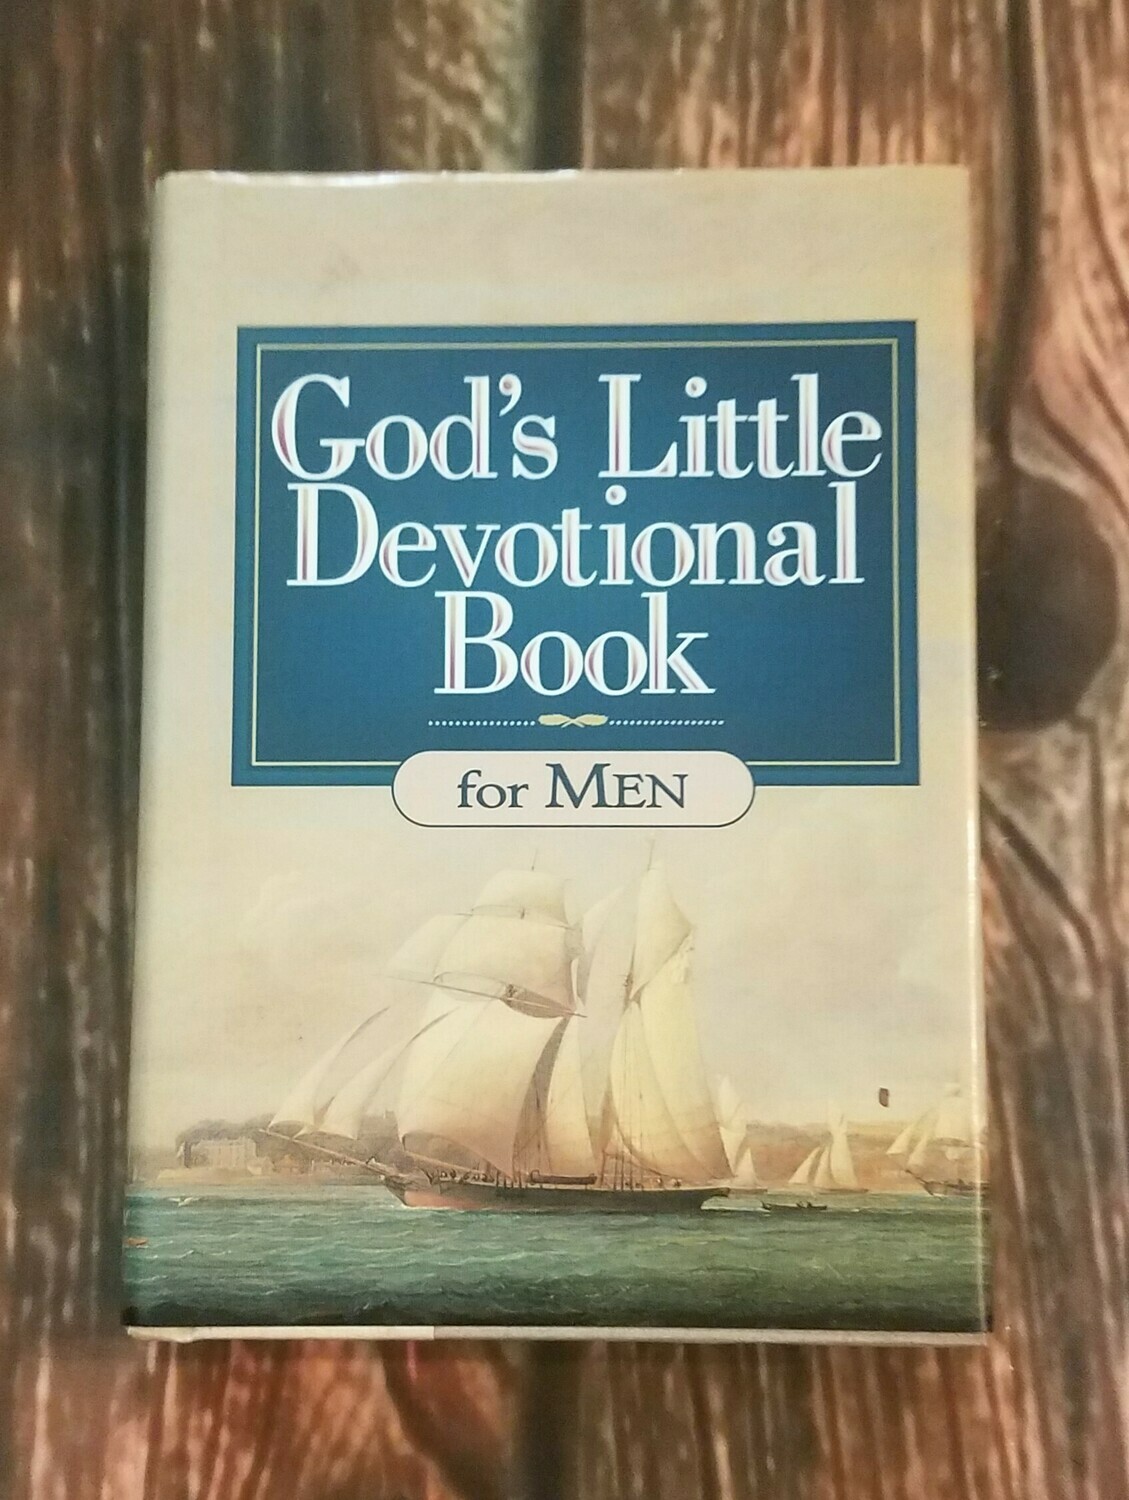 God's Little Devotional Book for Men by Honor Books, Inc.